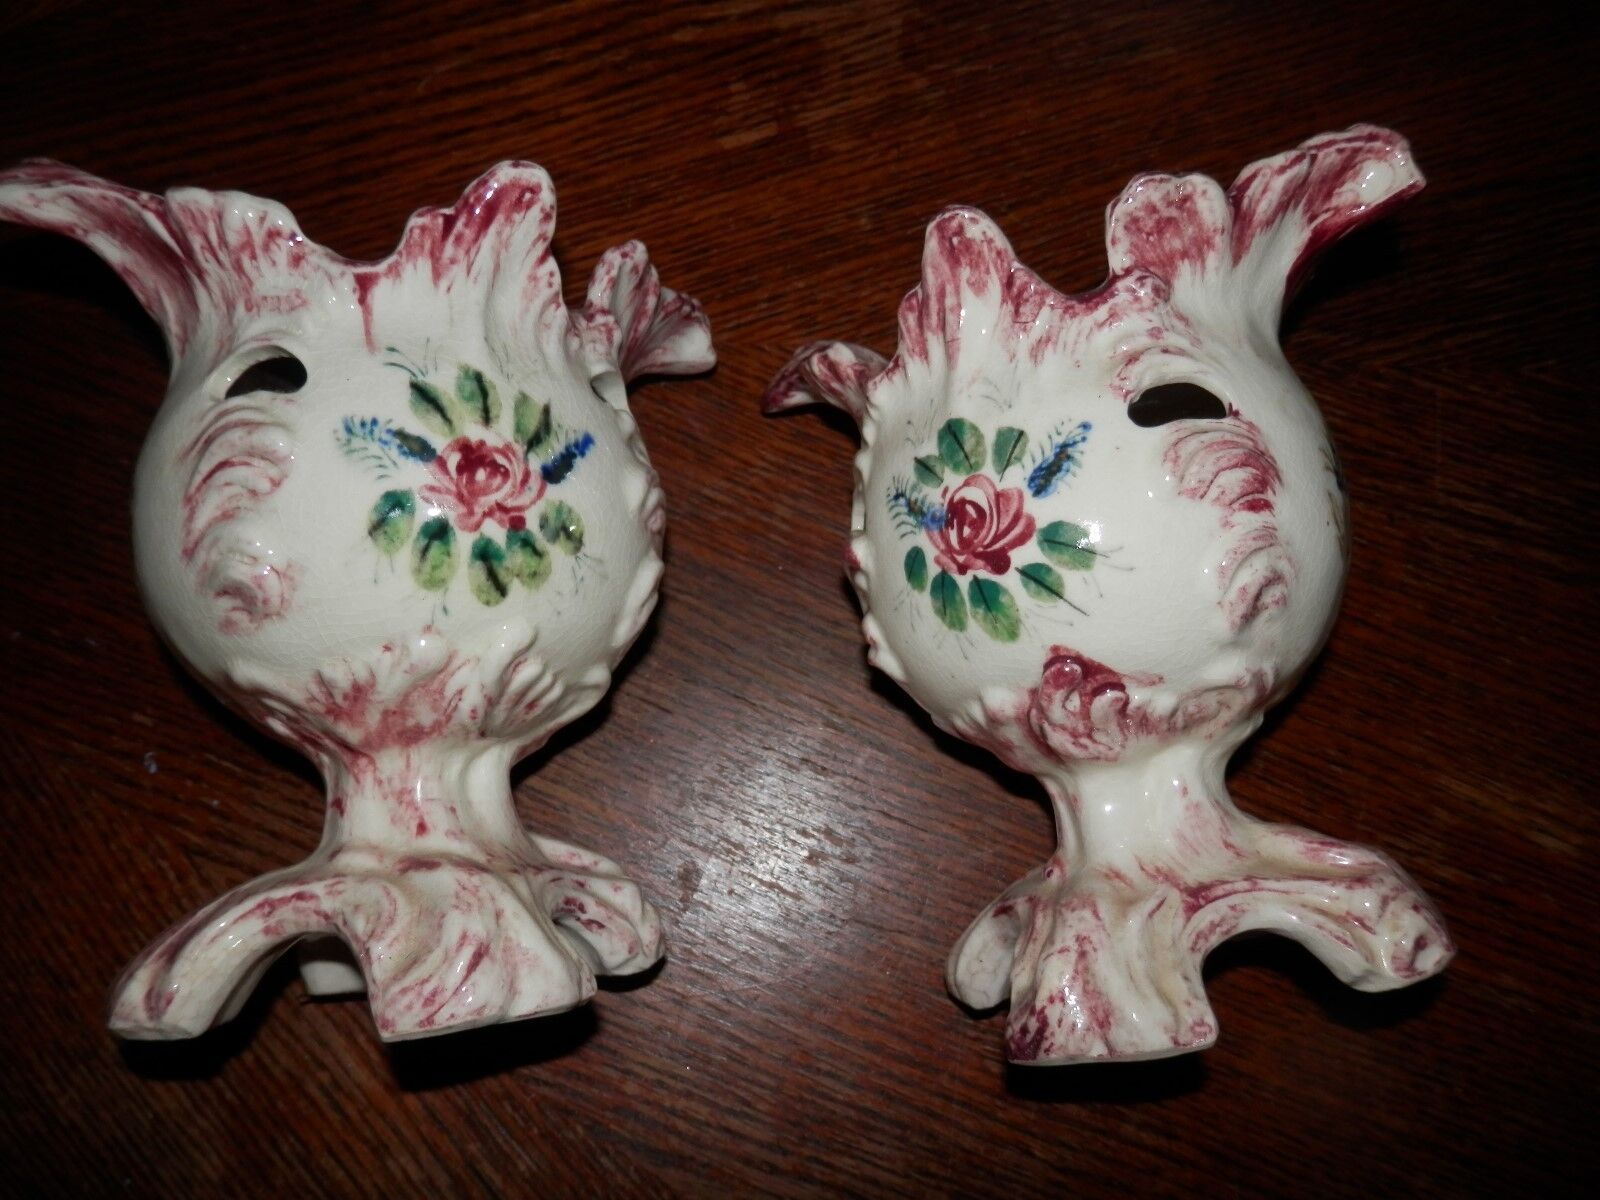 Made in Germany Vintage Ceramic Vases, Set of 2, Very Old, No Chips or Cracks